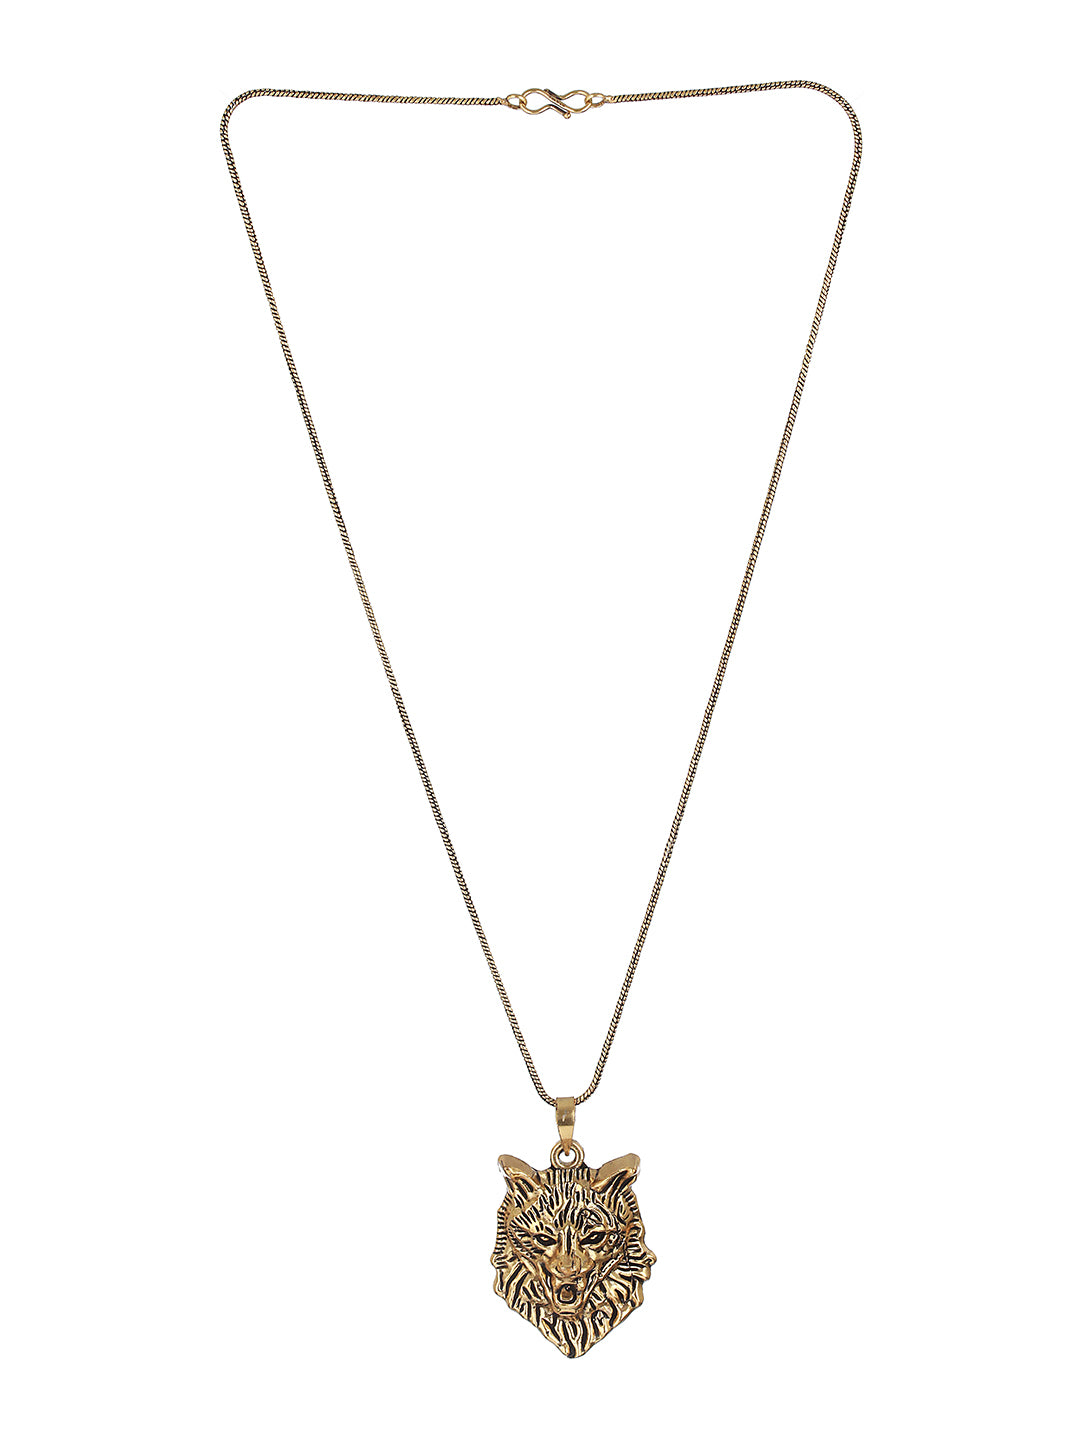 Buy 925 Silver Lion Pendant Necklace, Mens Lion Amulet, 925 Silver Leo Pendant  Necklace for Men Online in India - Etsy